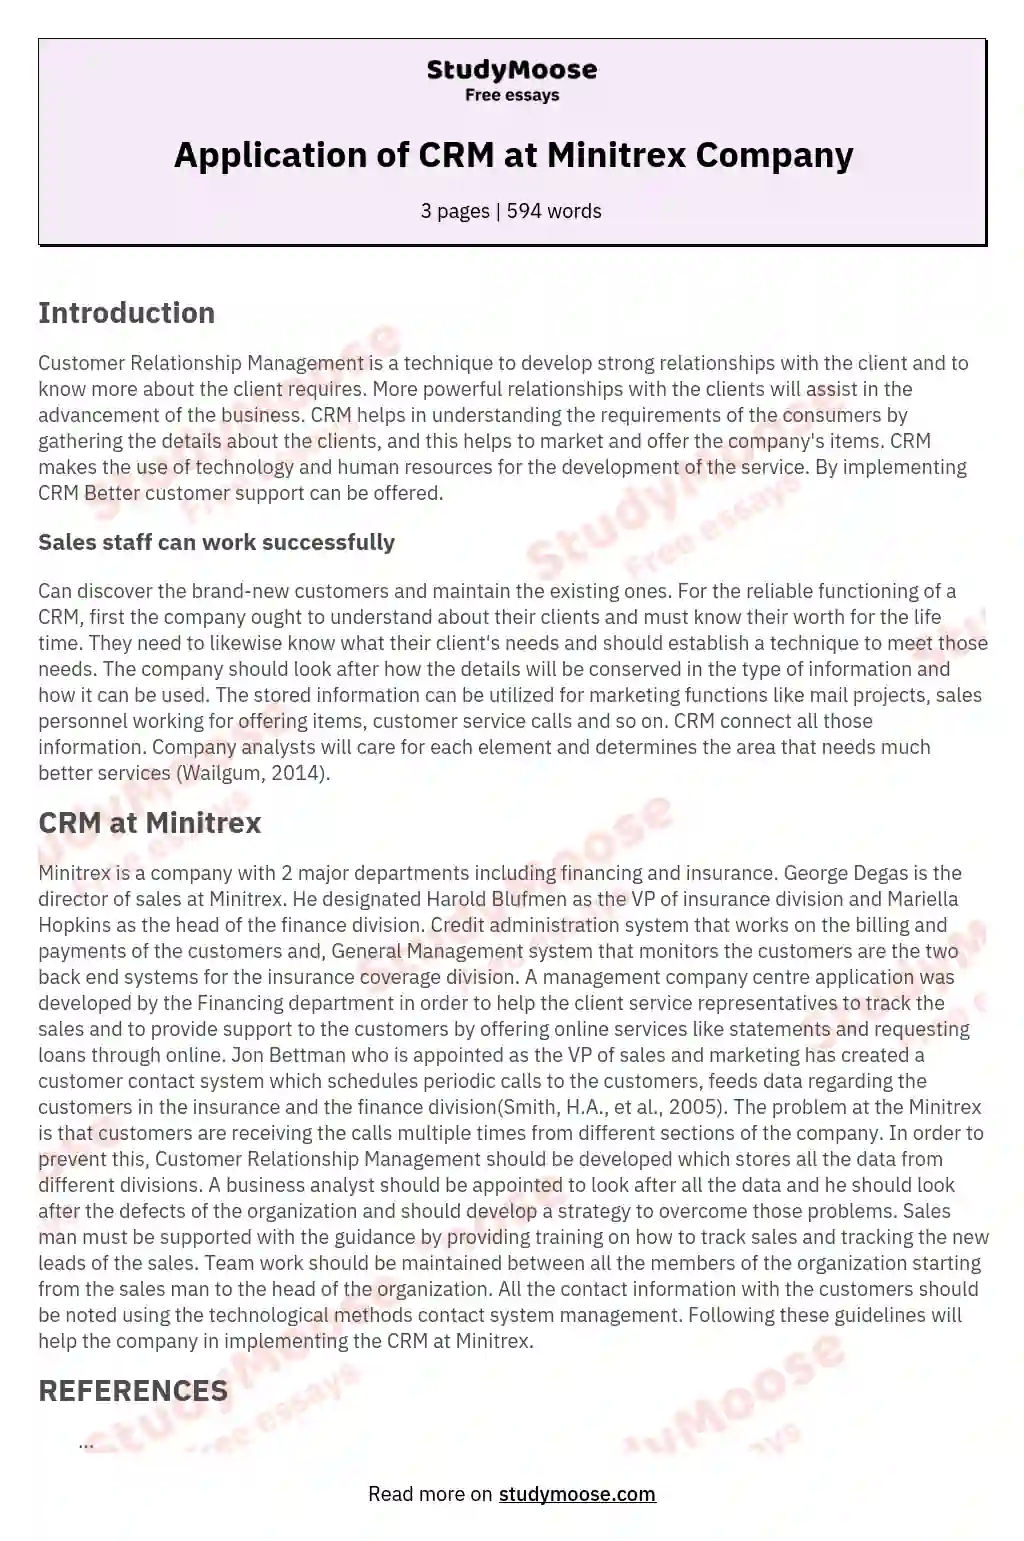 Application of CRM at Minitrex Company